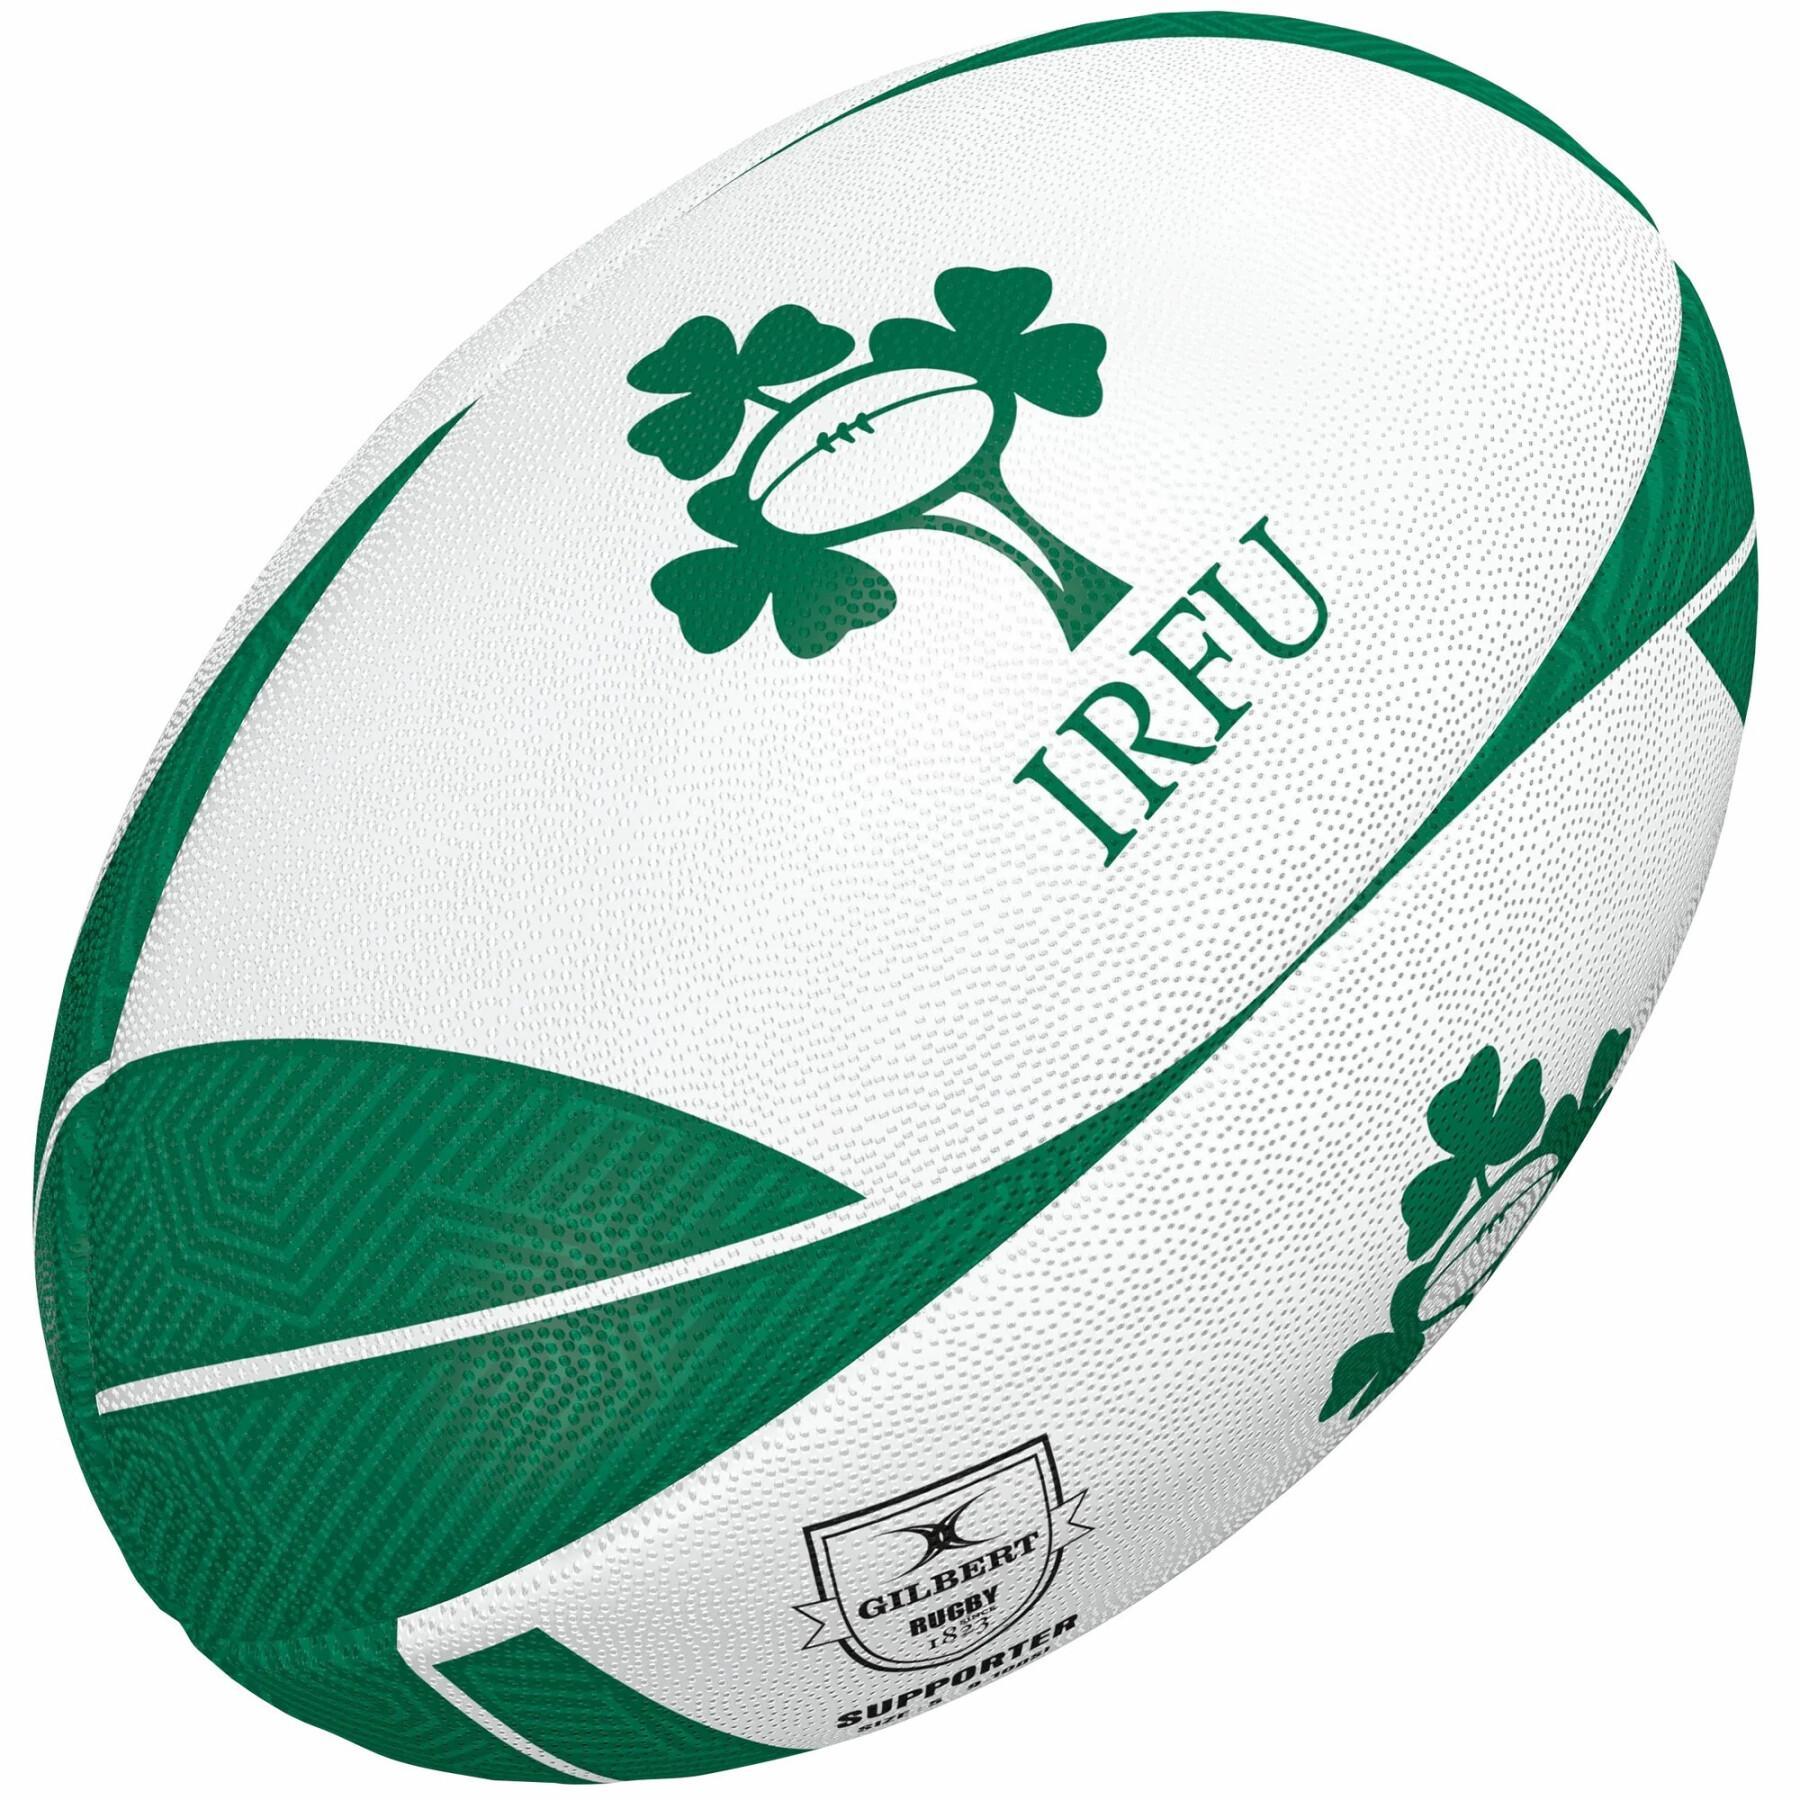 Set of 5 Rugby balls Ireland